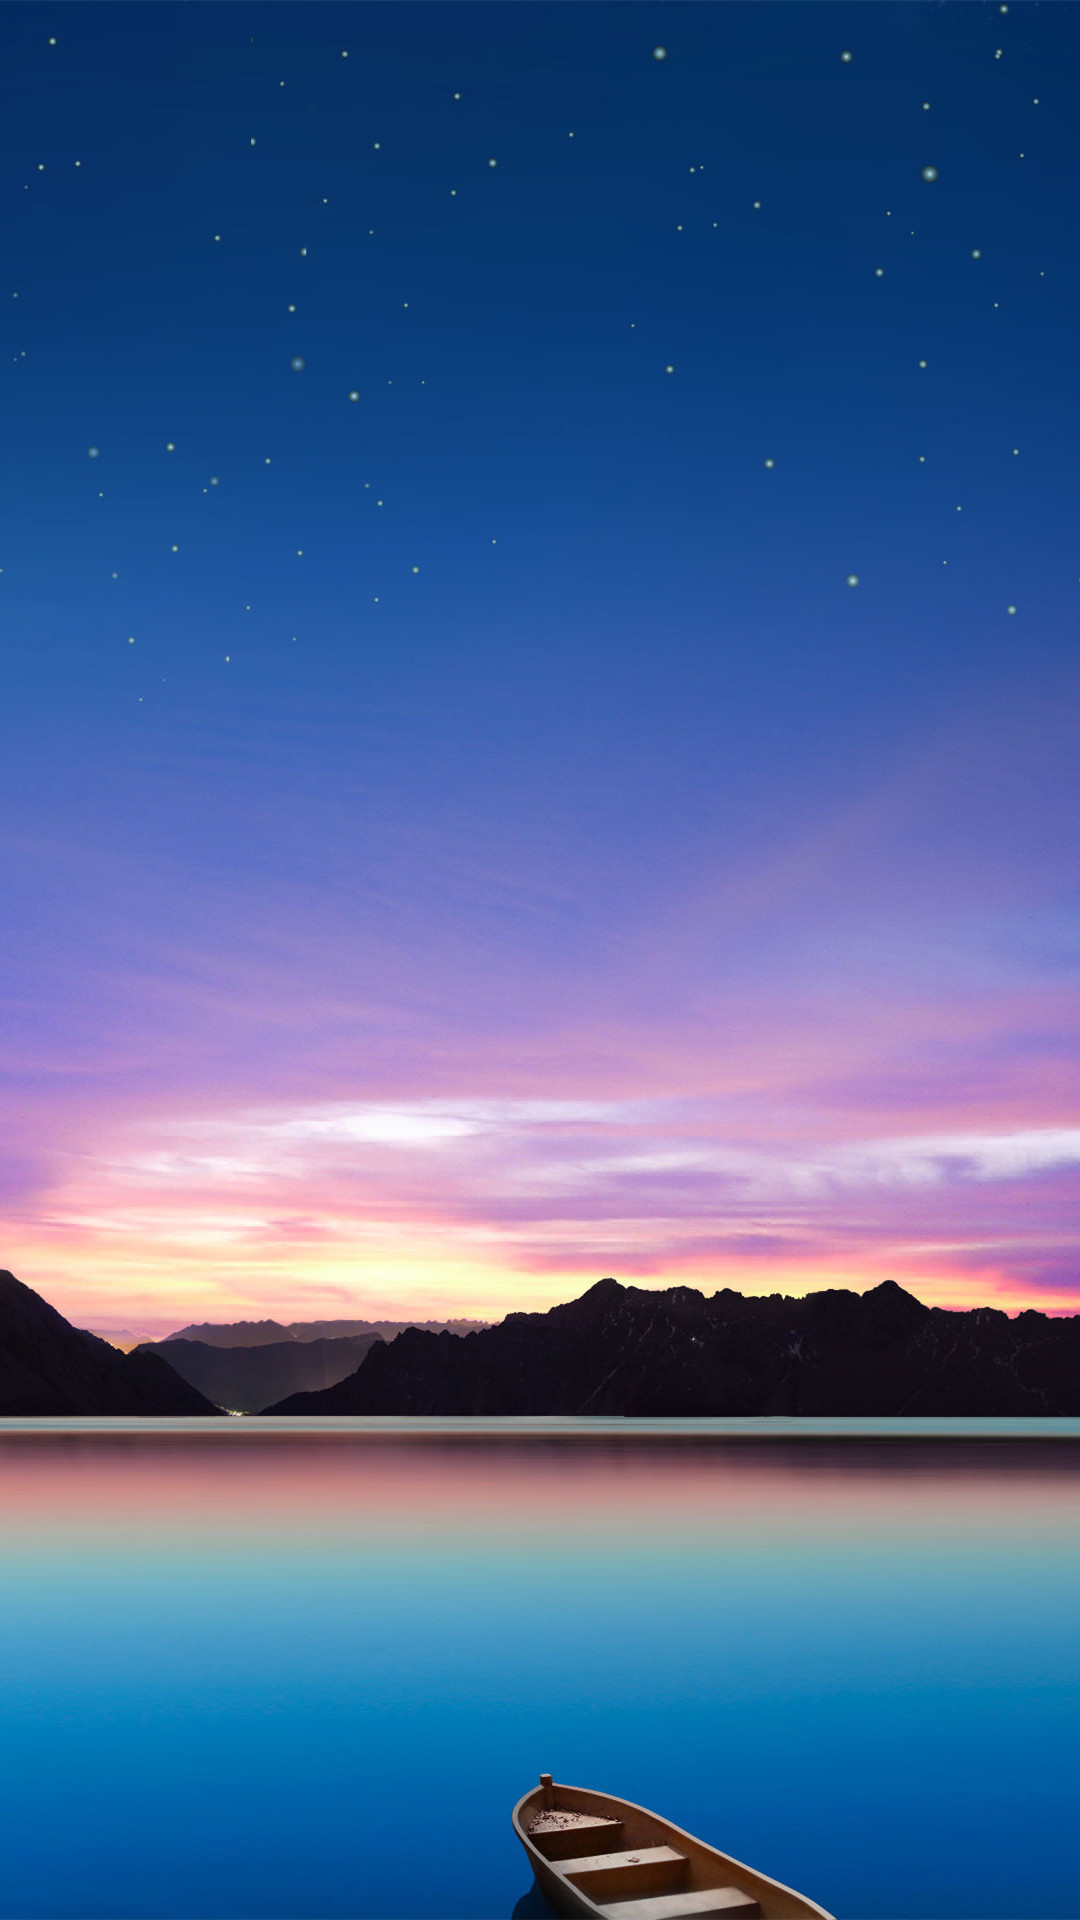 1080x1920 Wonderful Lake Night Iphone 8 Wallpaper Download Iphone Wallpapers